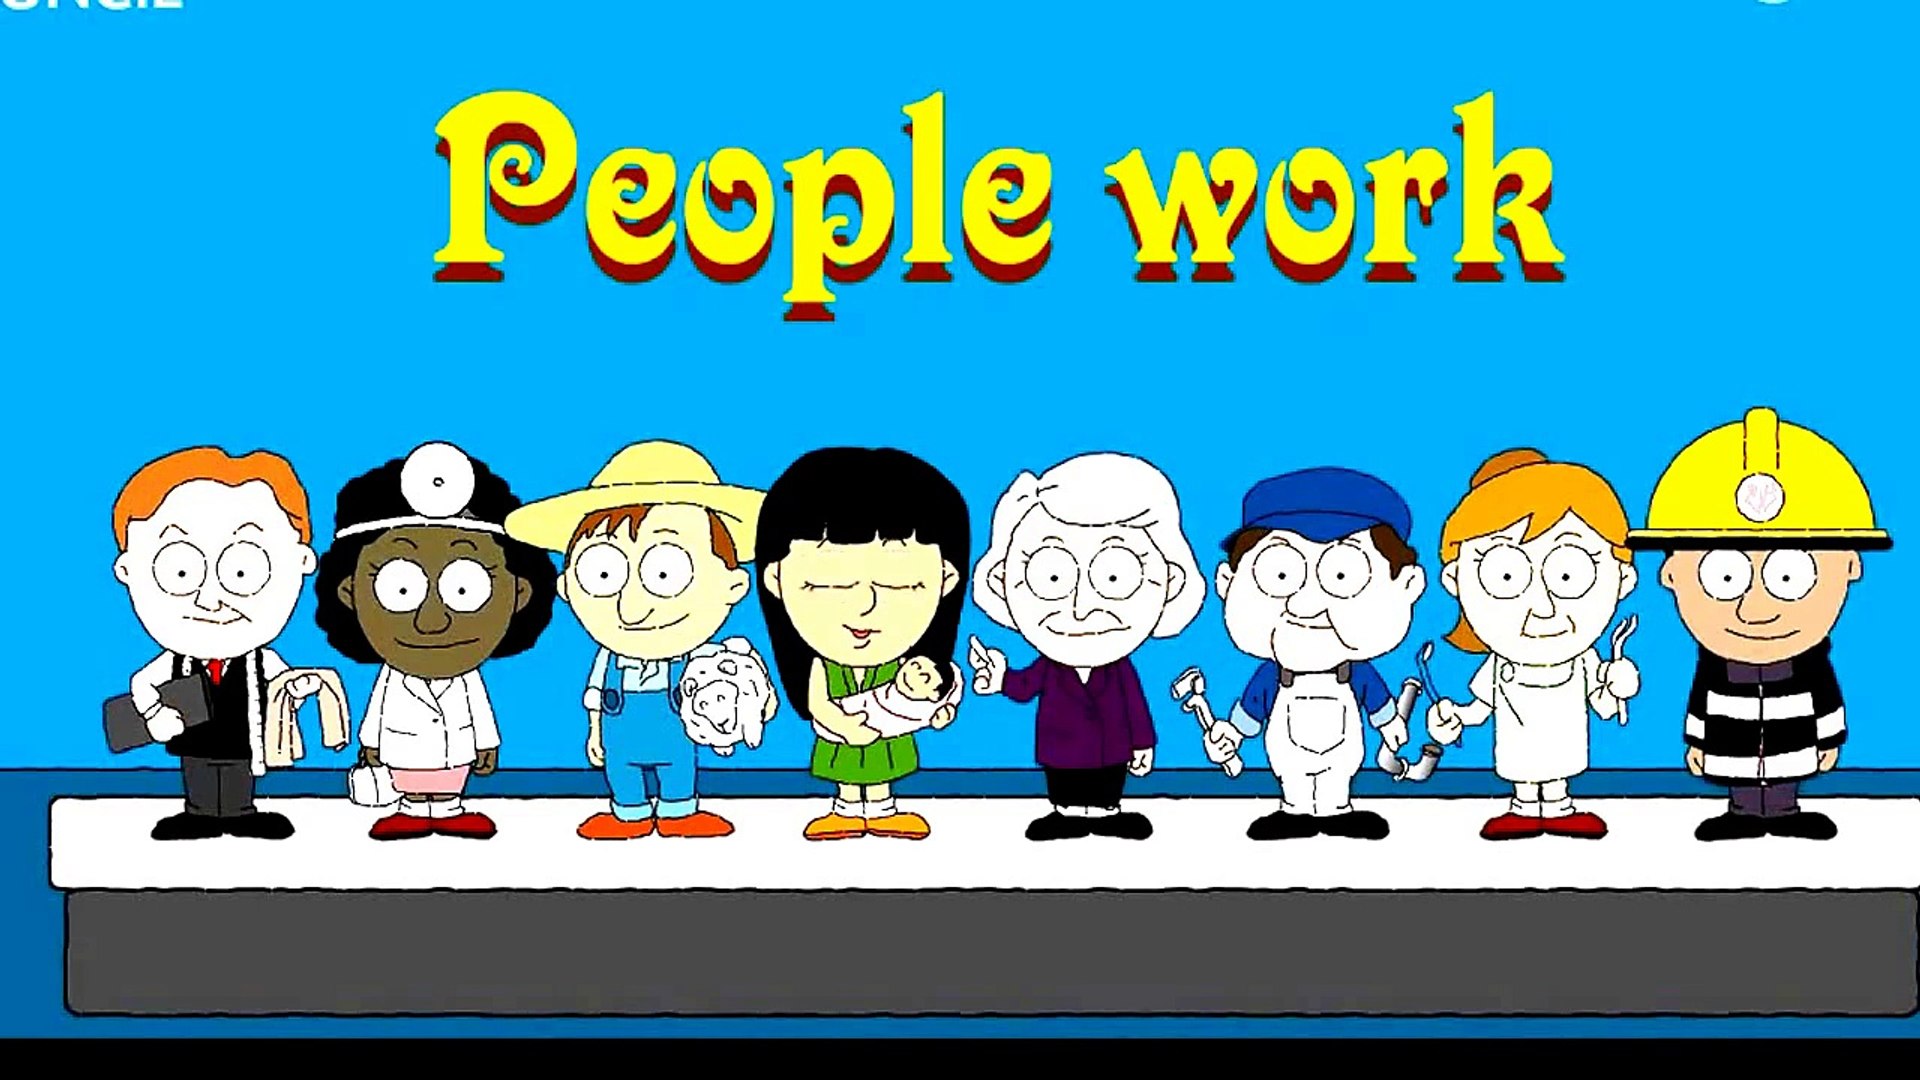 People work, Nursery Rhymes & Kids Songs, Learn English Kids, British  Council - video Dailymotion